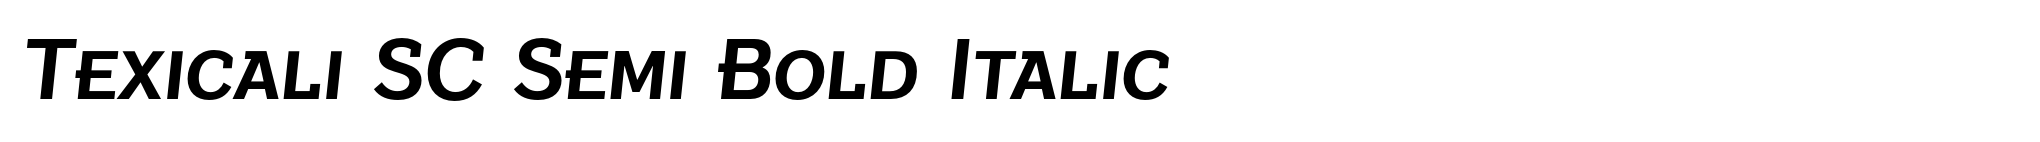 Texicali SC Semi Bold Italic image